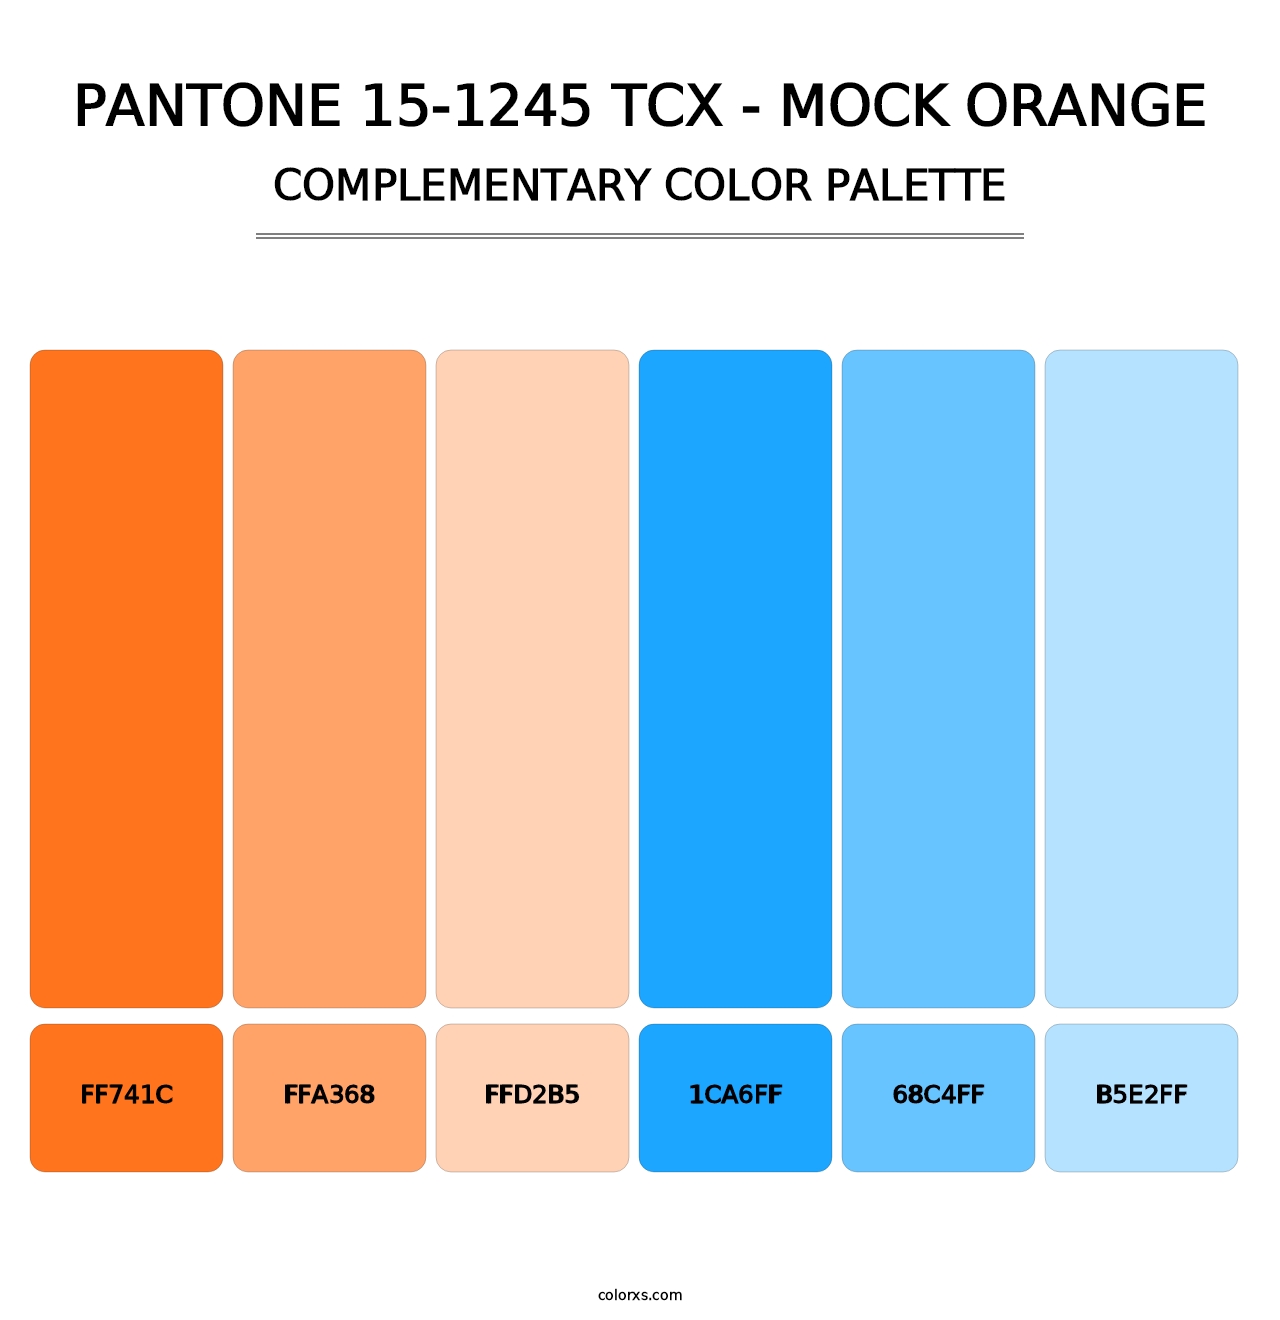 PANTONE 15-1245 TCX - Mock Orange - Complementary Color Palette